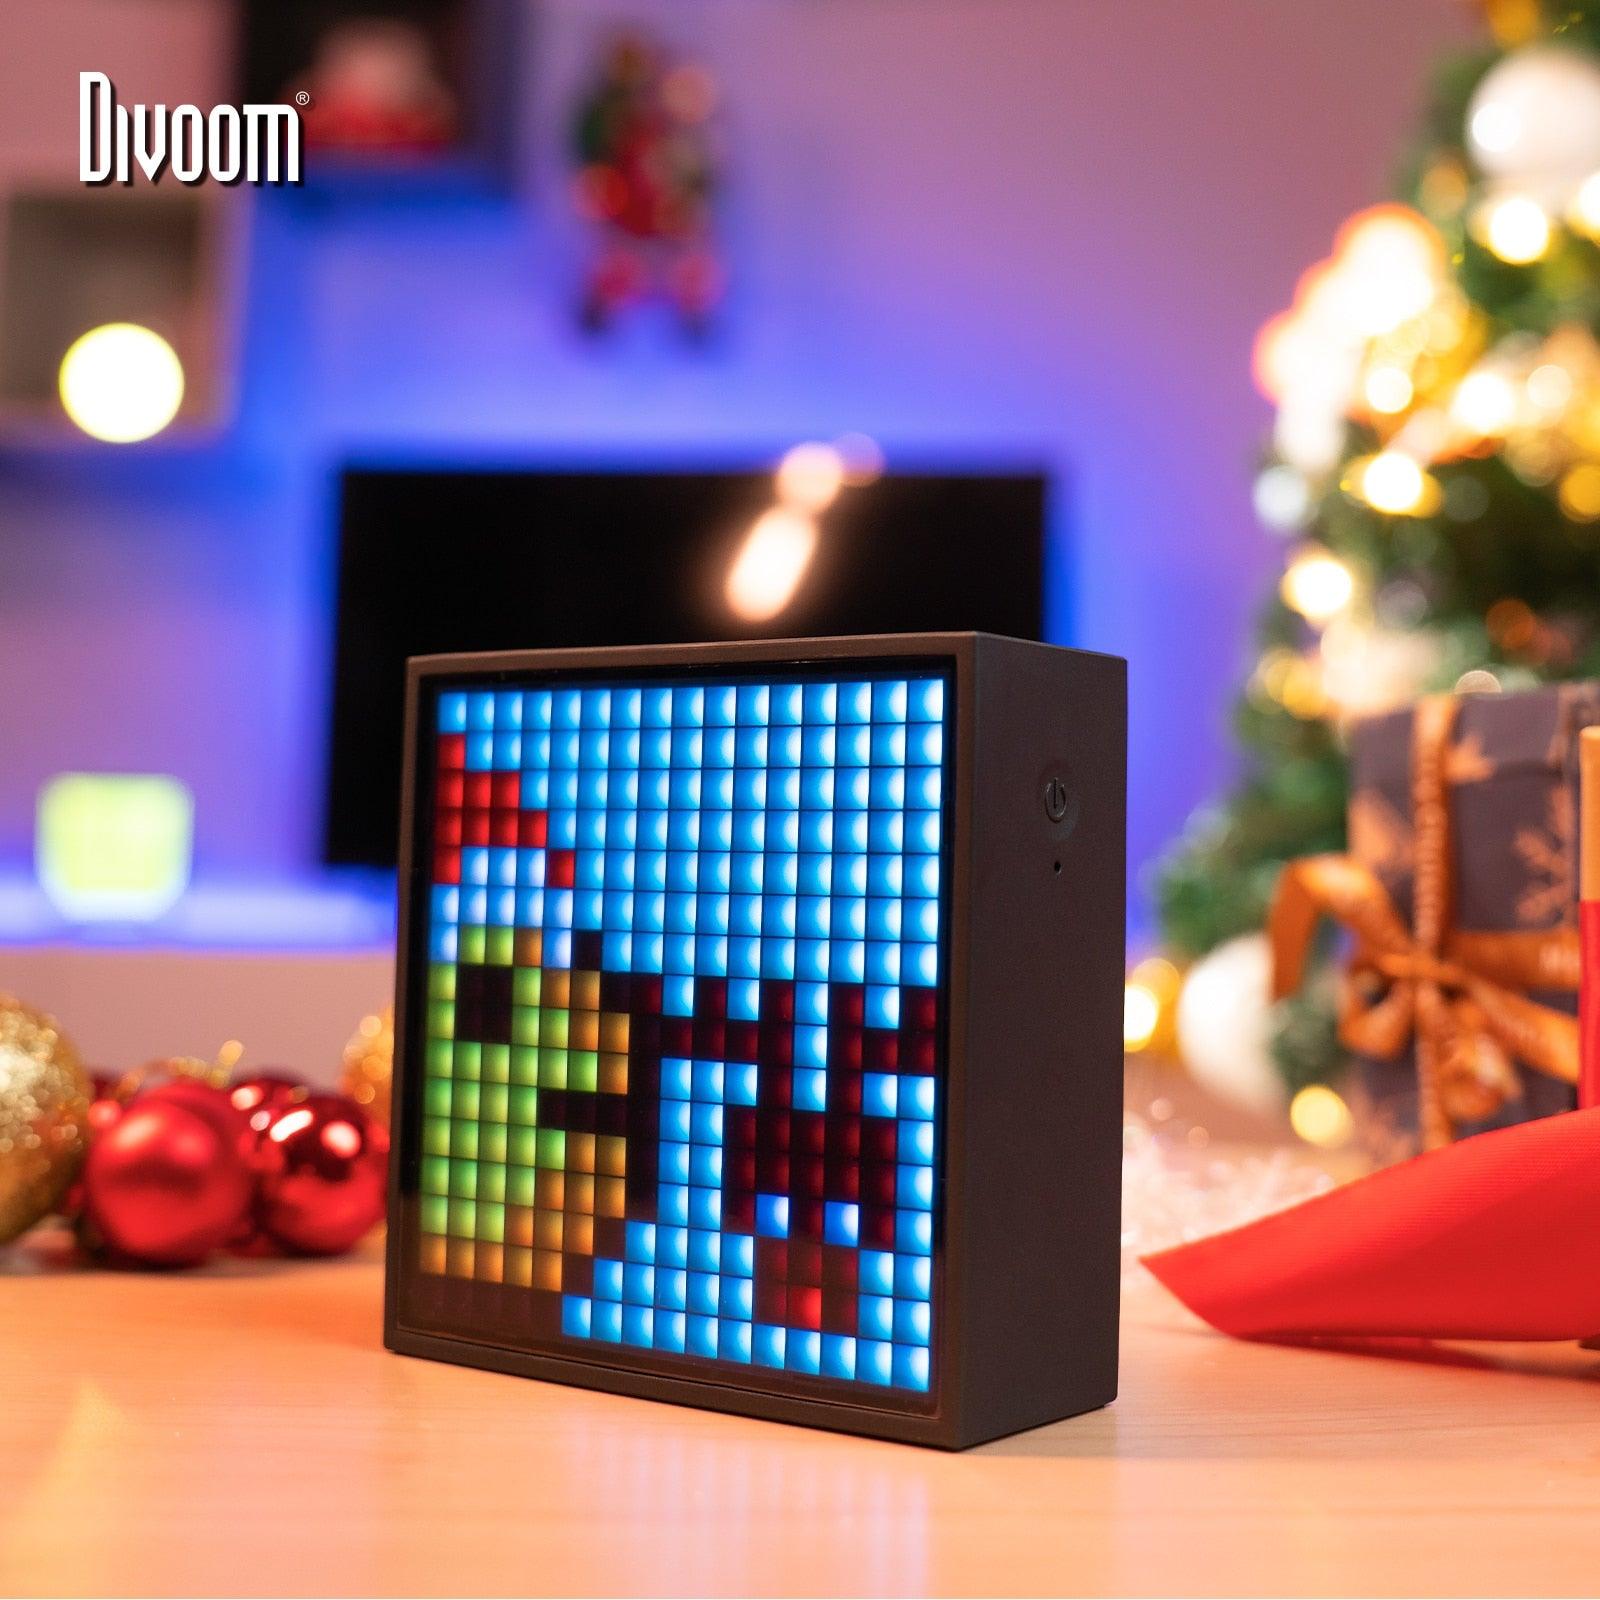 Divoom Timebox Evo Pixel Art Clock - Versatile and Creative Decor